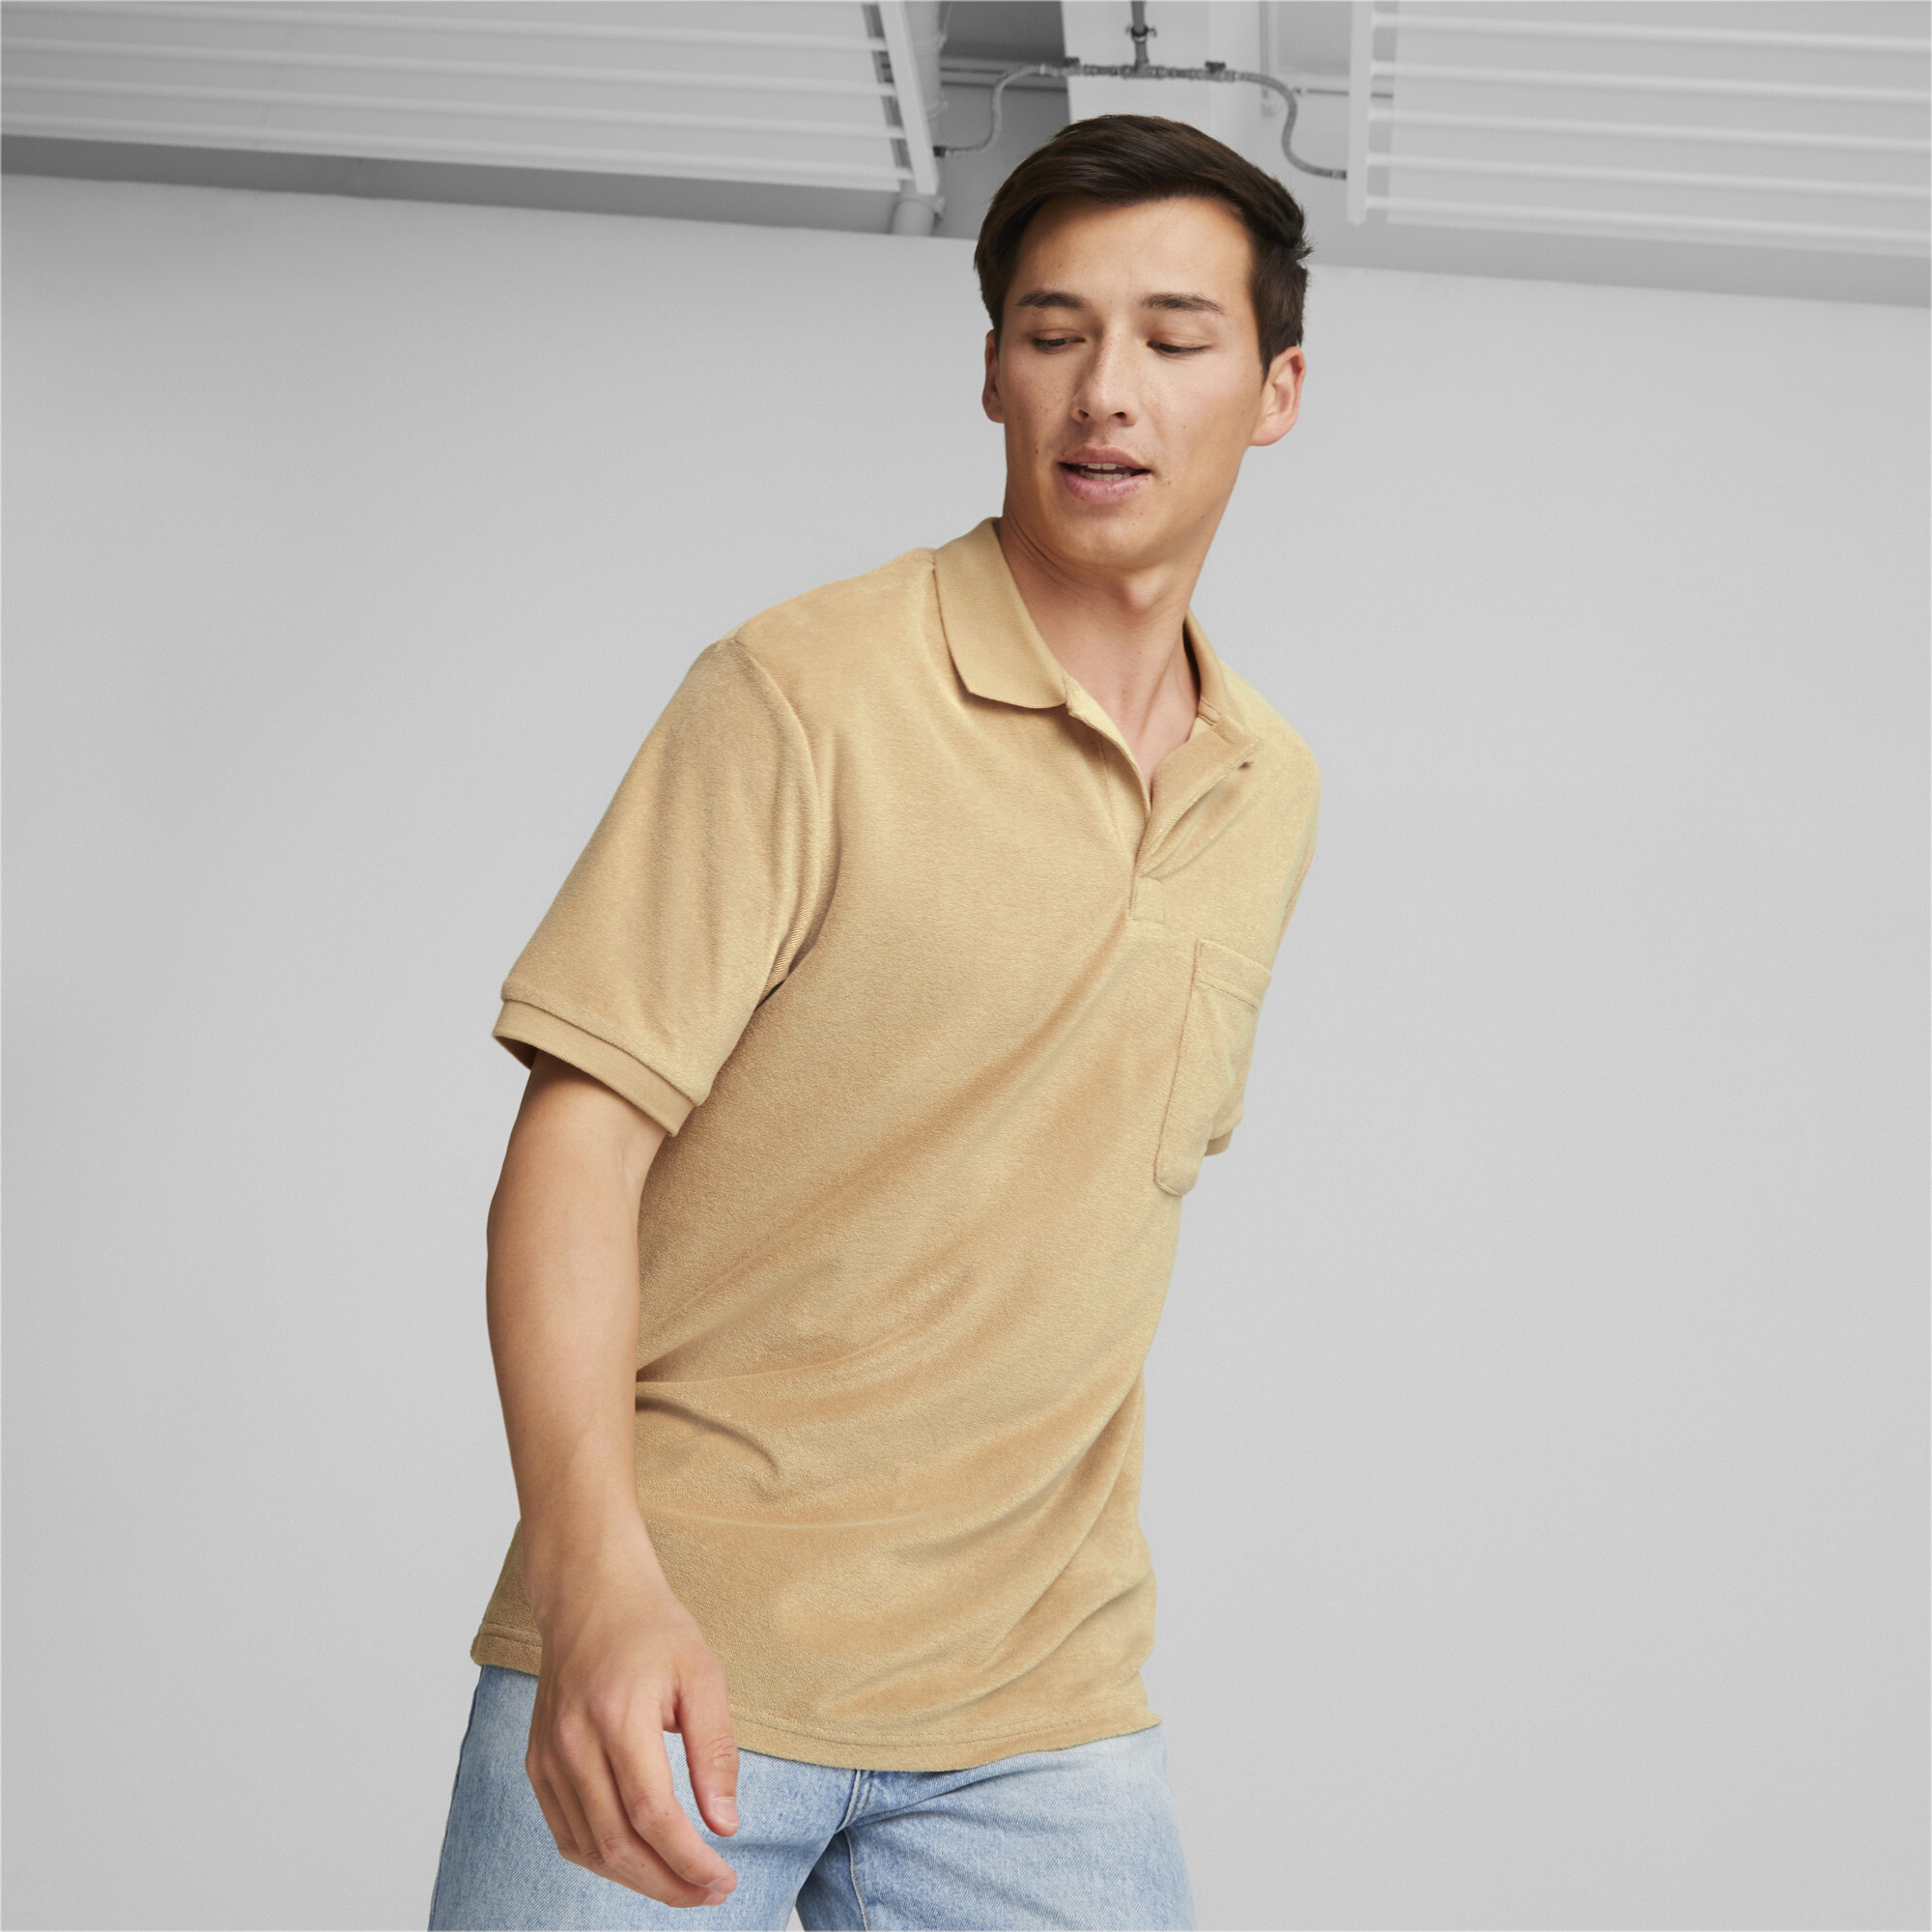 Men's Puma Classics Towelling Polo Shirt T-Shirt, Beige T-Shirt, Size XL T-Shirt, Clothing